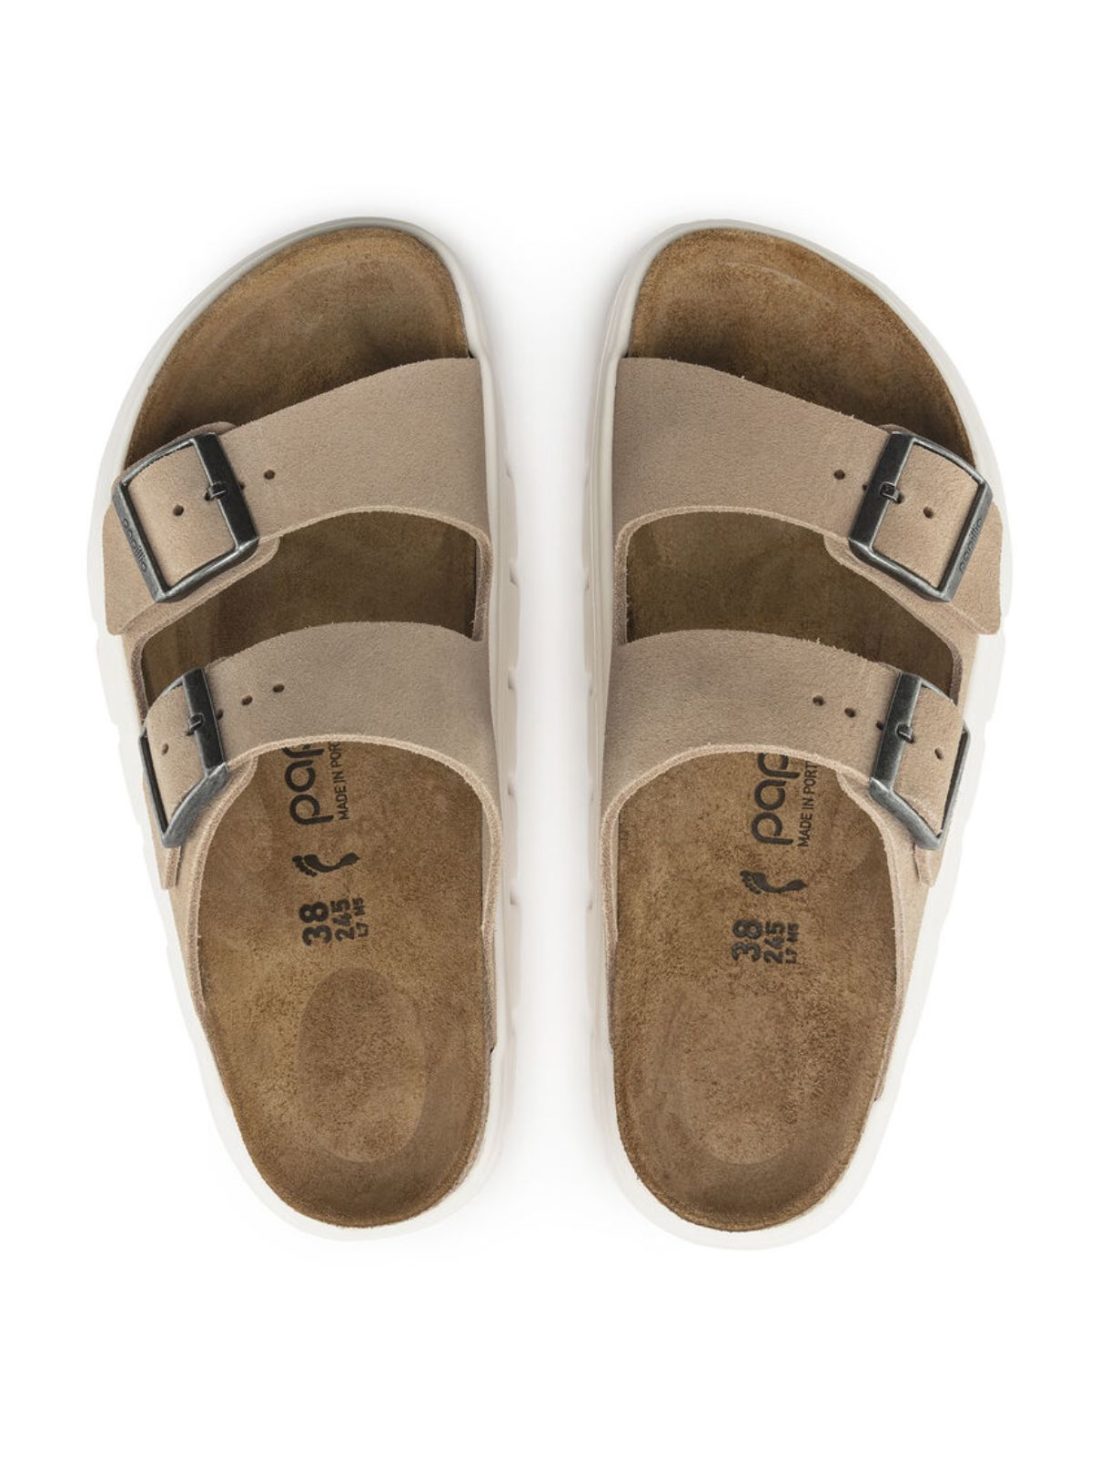 birkenstock arizona chunky suede sandal in warm sand